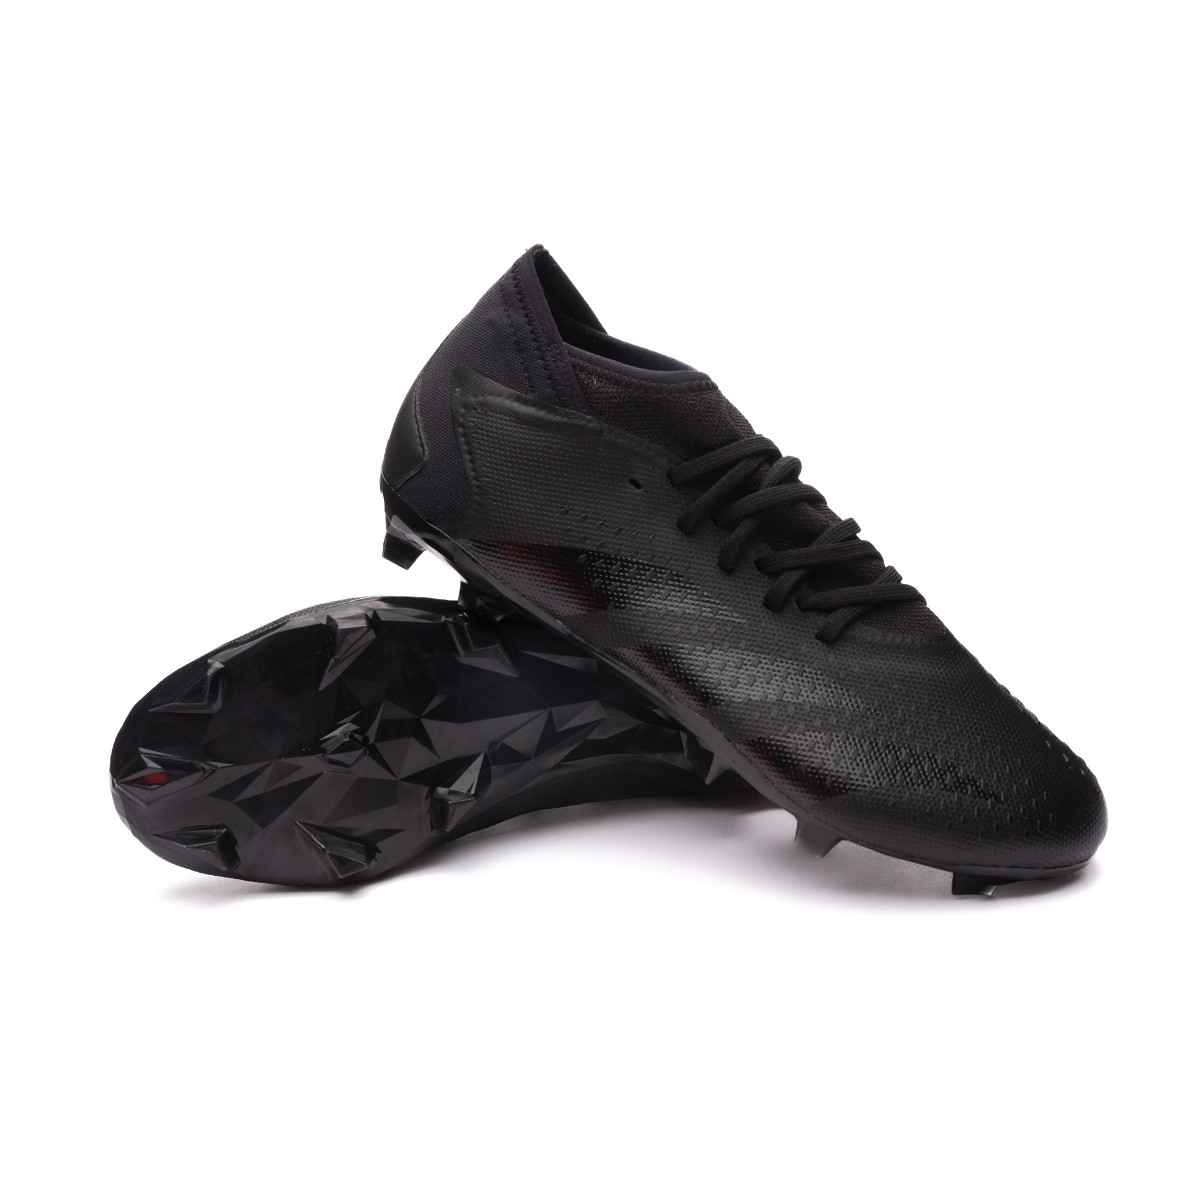 Black Emotion Boots Predator - Accuracy.3 Fútbol Football FG adidas